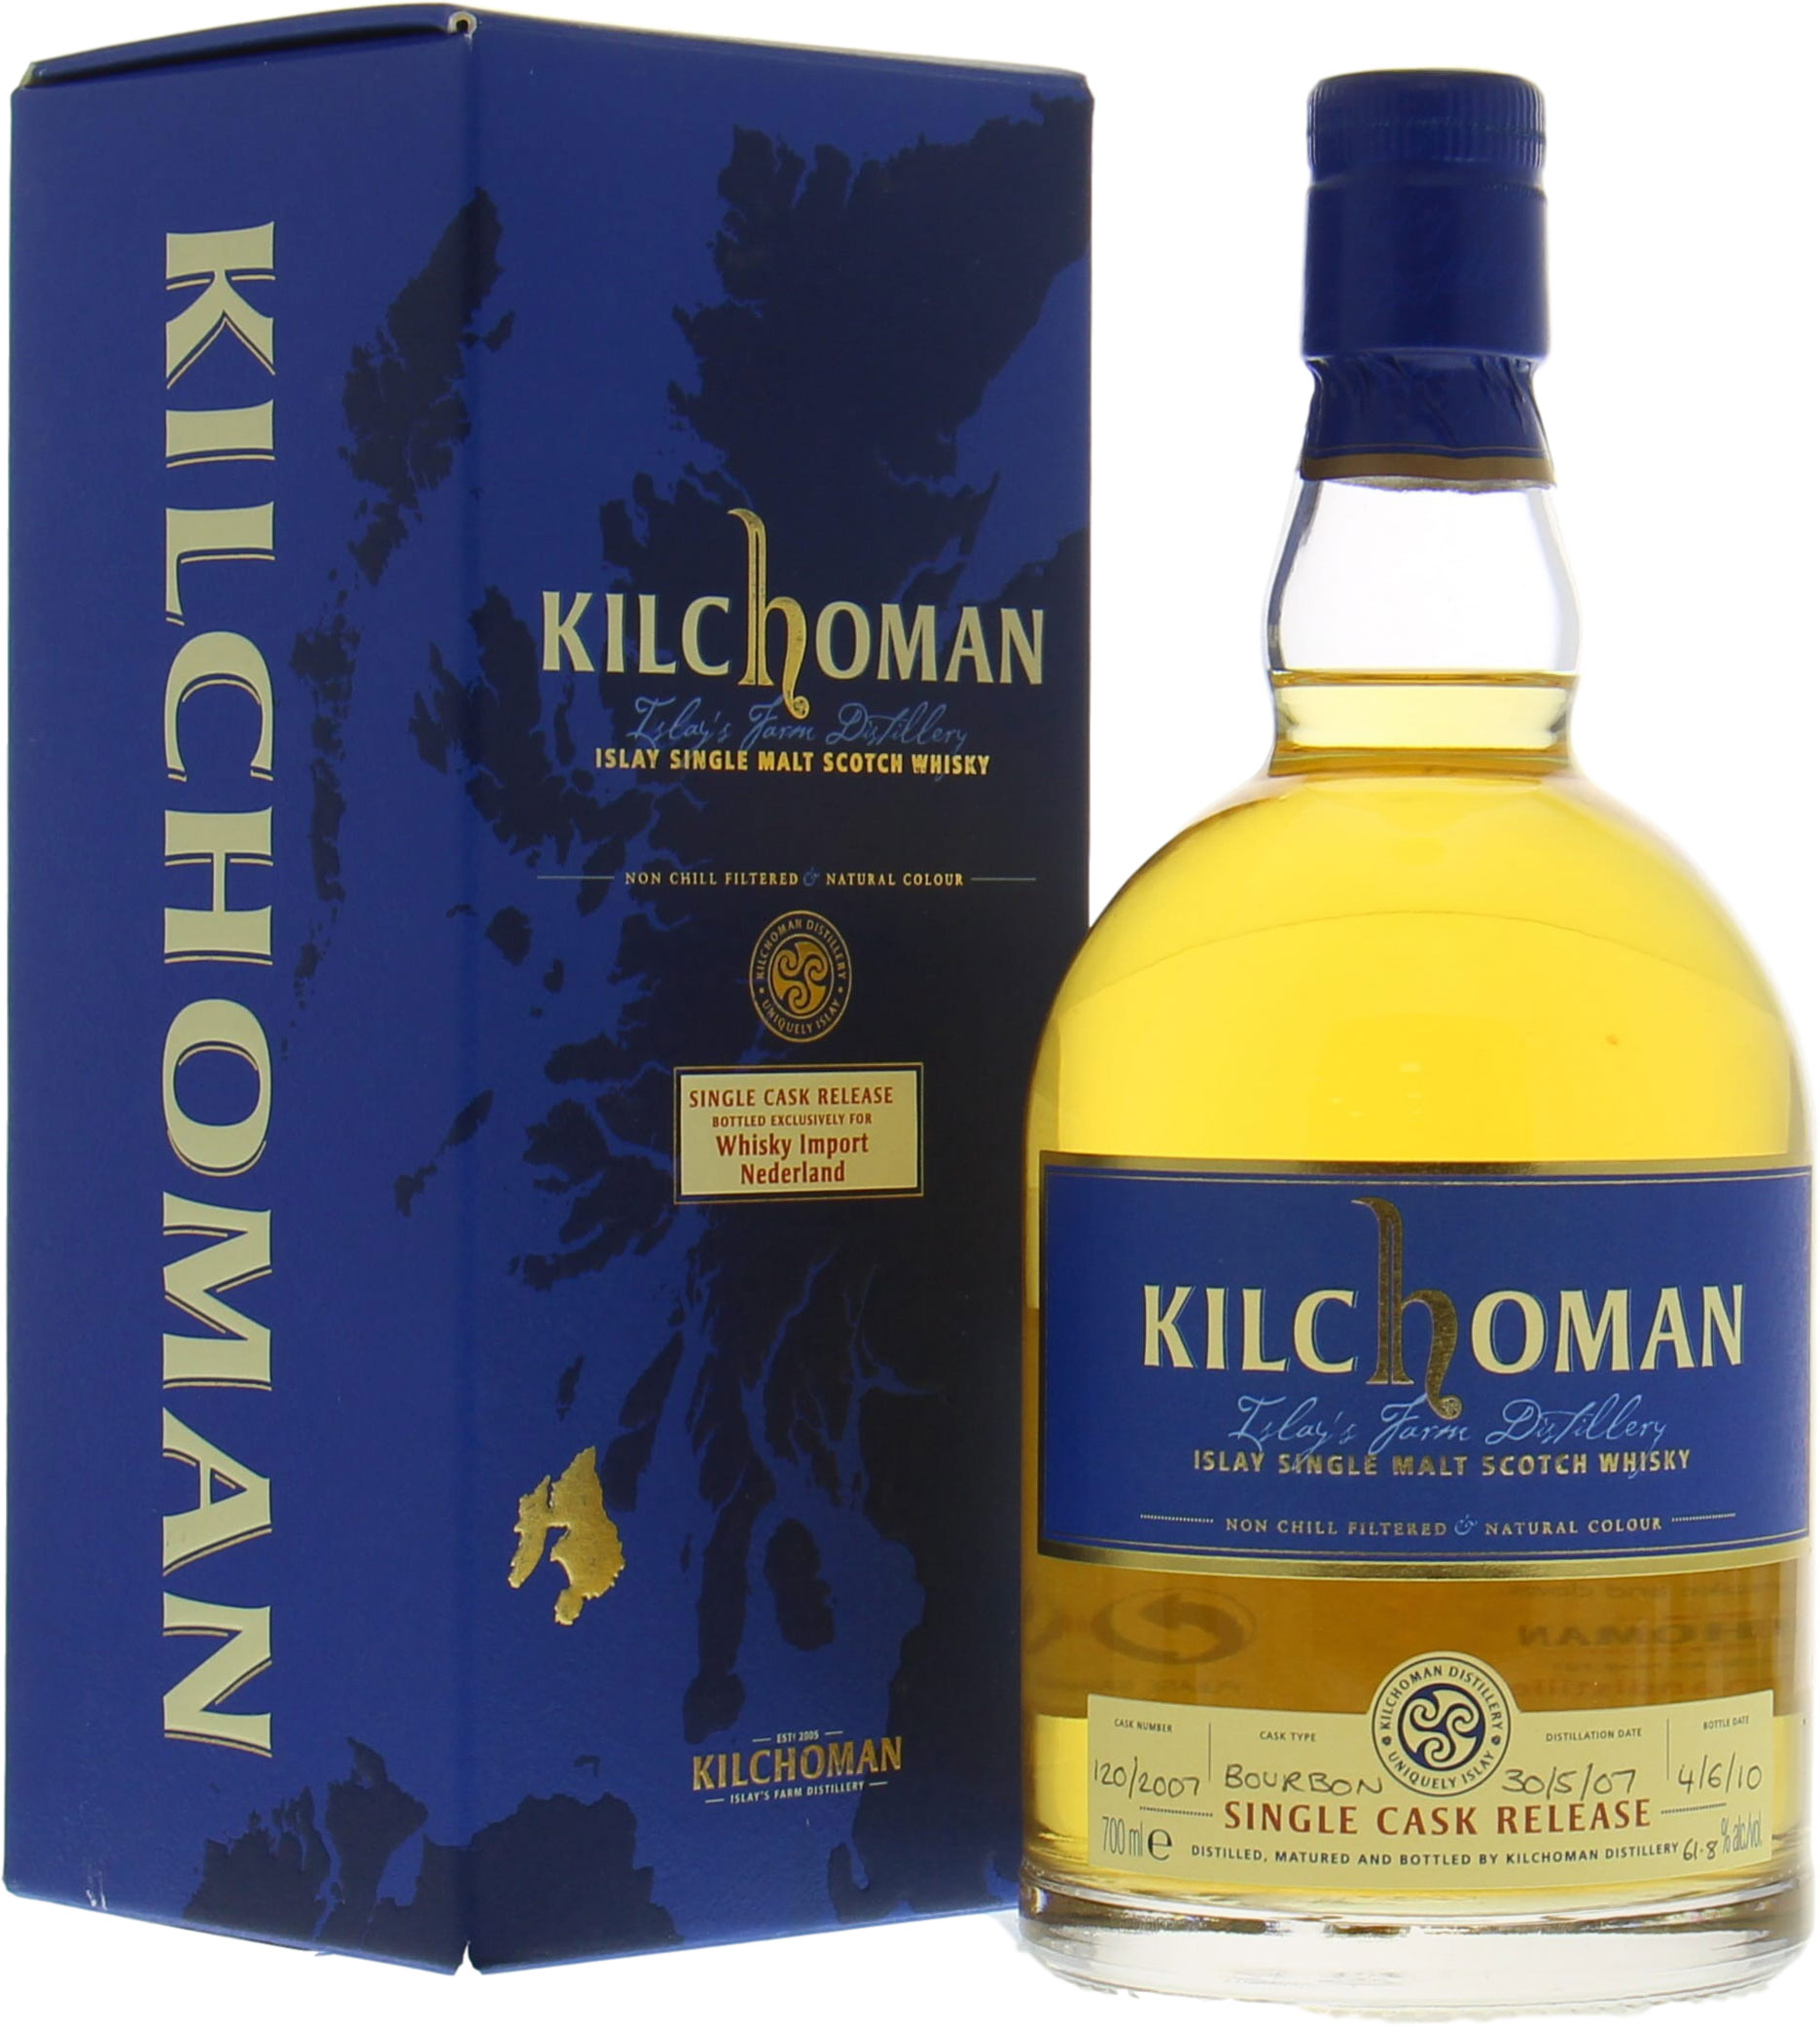 Kilchoman - 2009 Single Cask for Whisky Import Netherlands Cask 120/2007 61.8% 2007 In Original Container